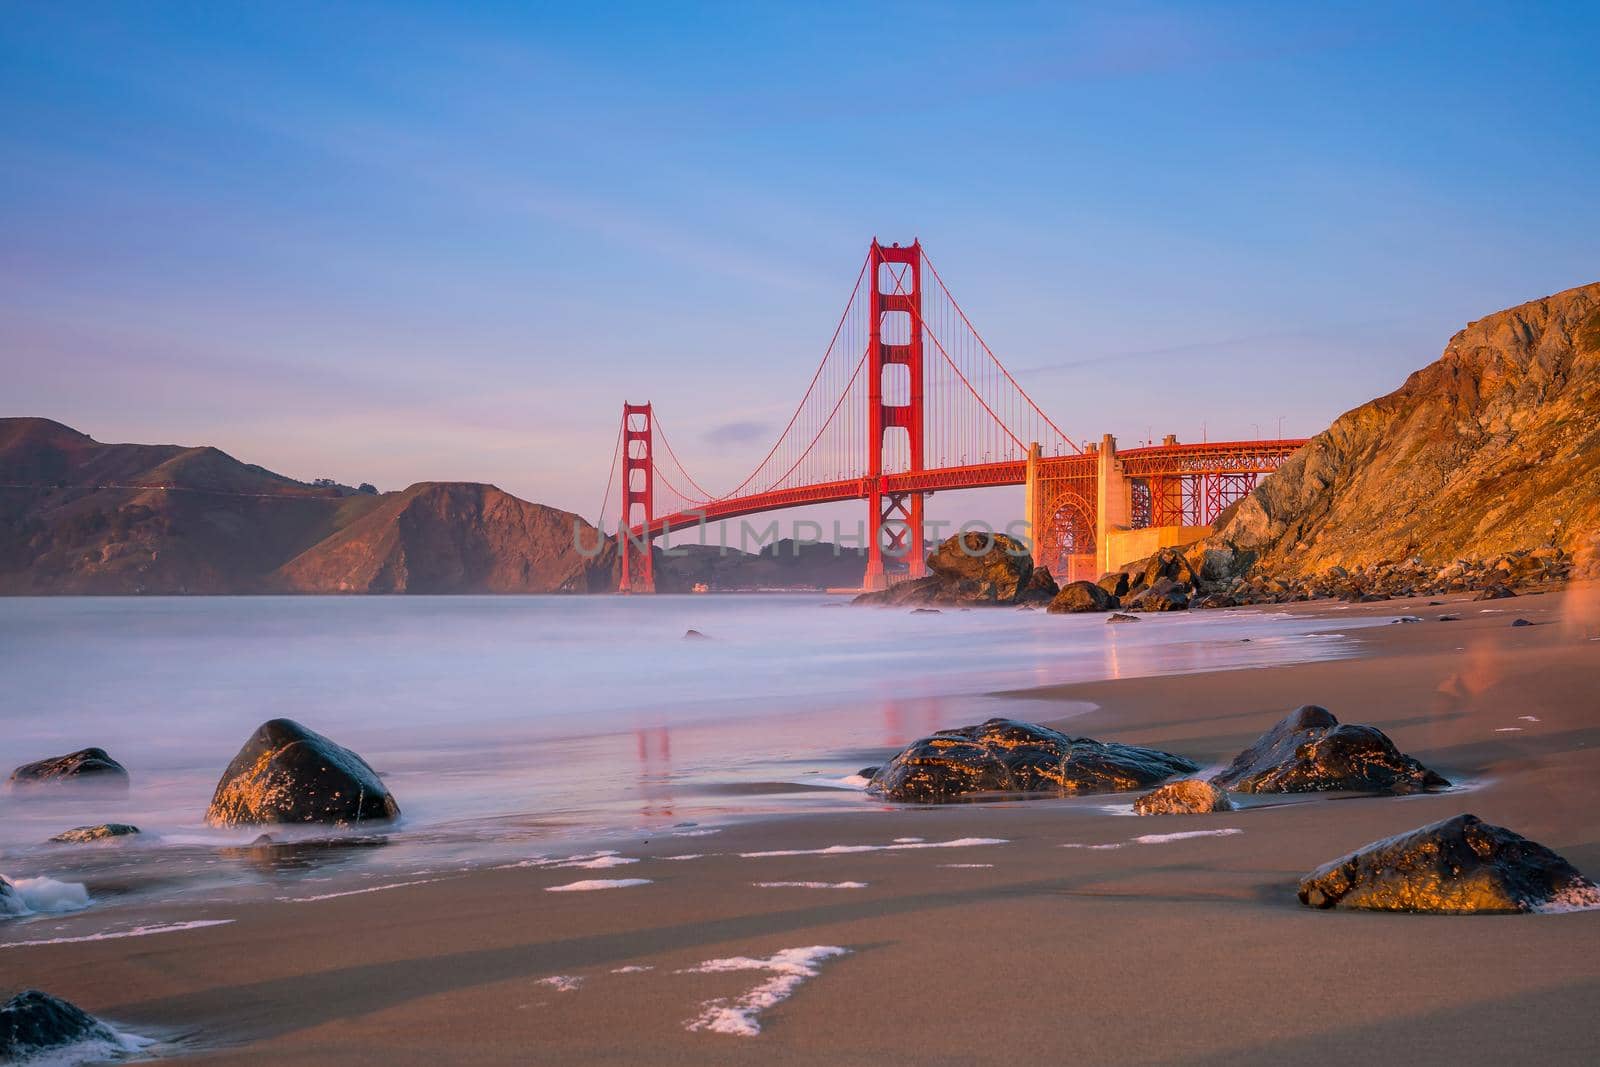 Golden Gate Bridge in San Francisco, California by f11photo